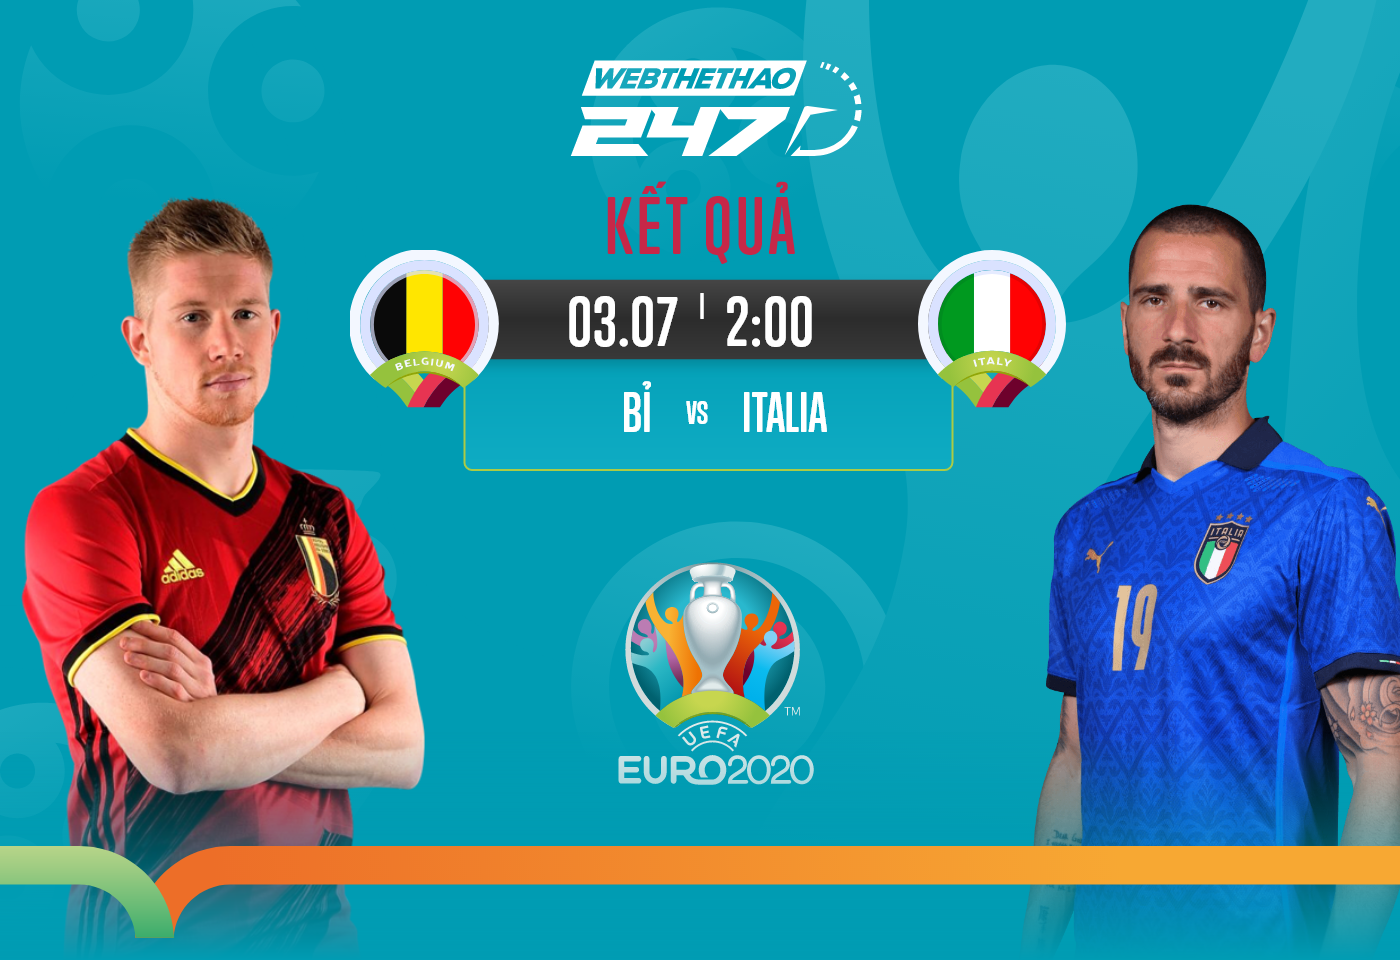 Kết quả Bỉ vs Italia (Ý)